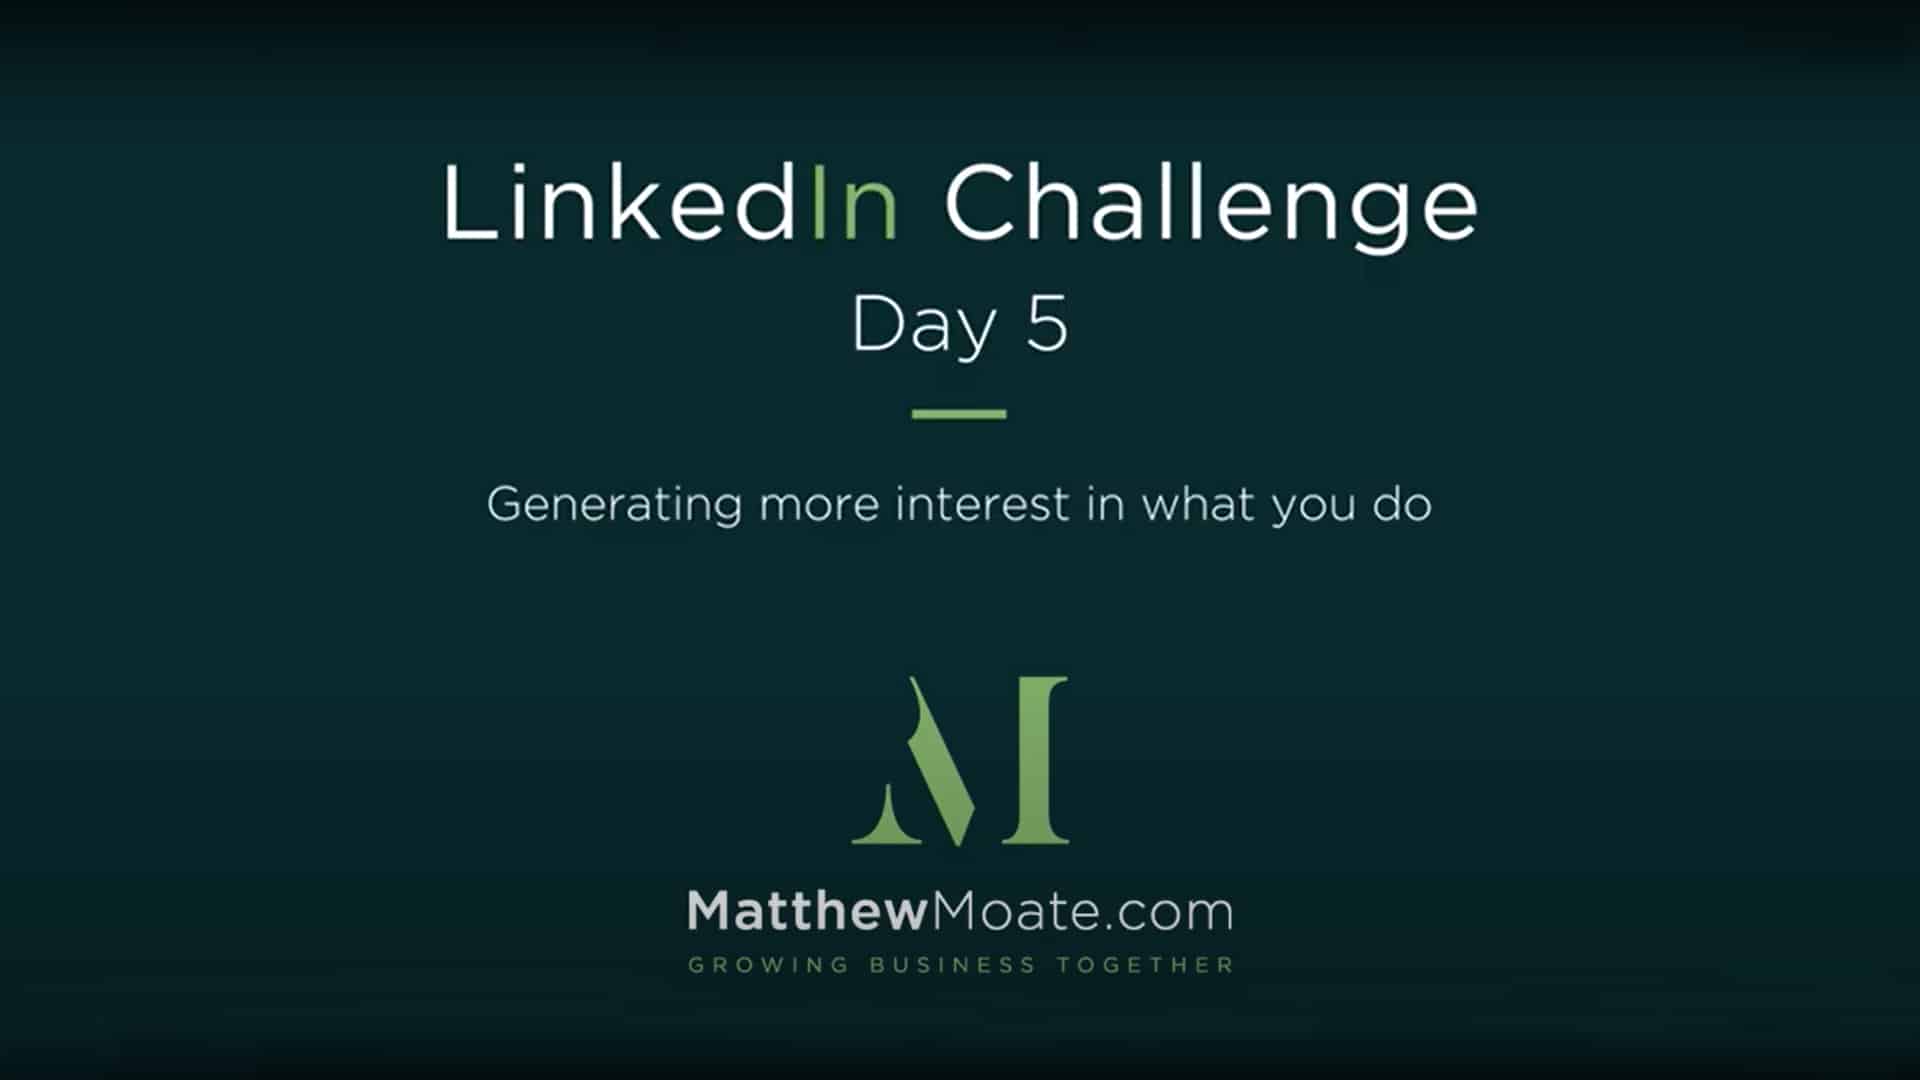 Matthew Moate's LinkedIn Challenge DAY 5